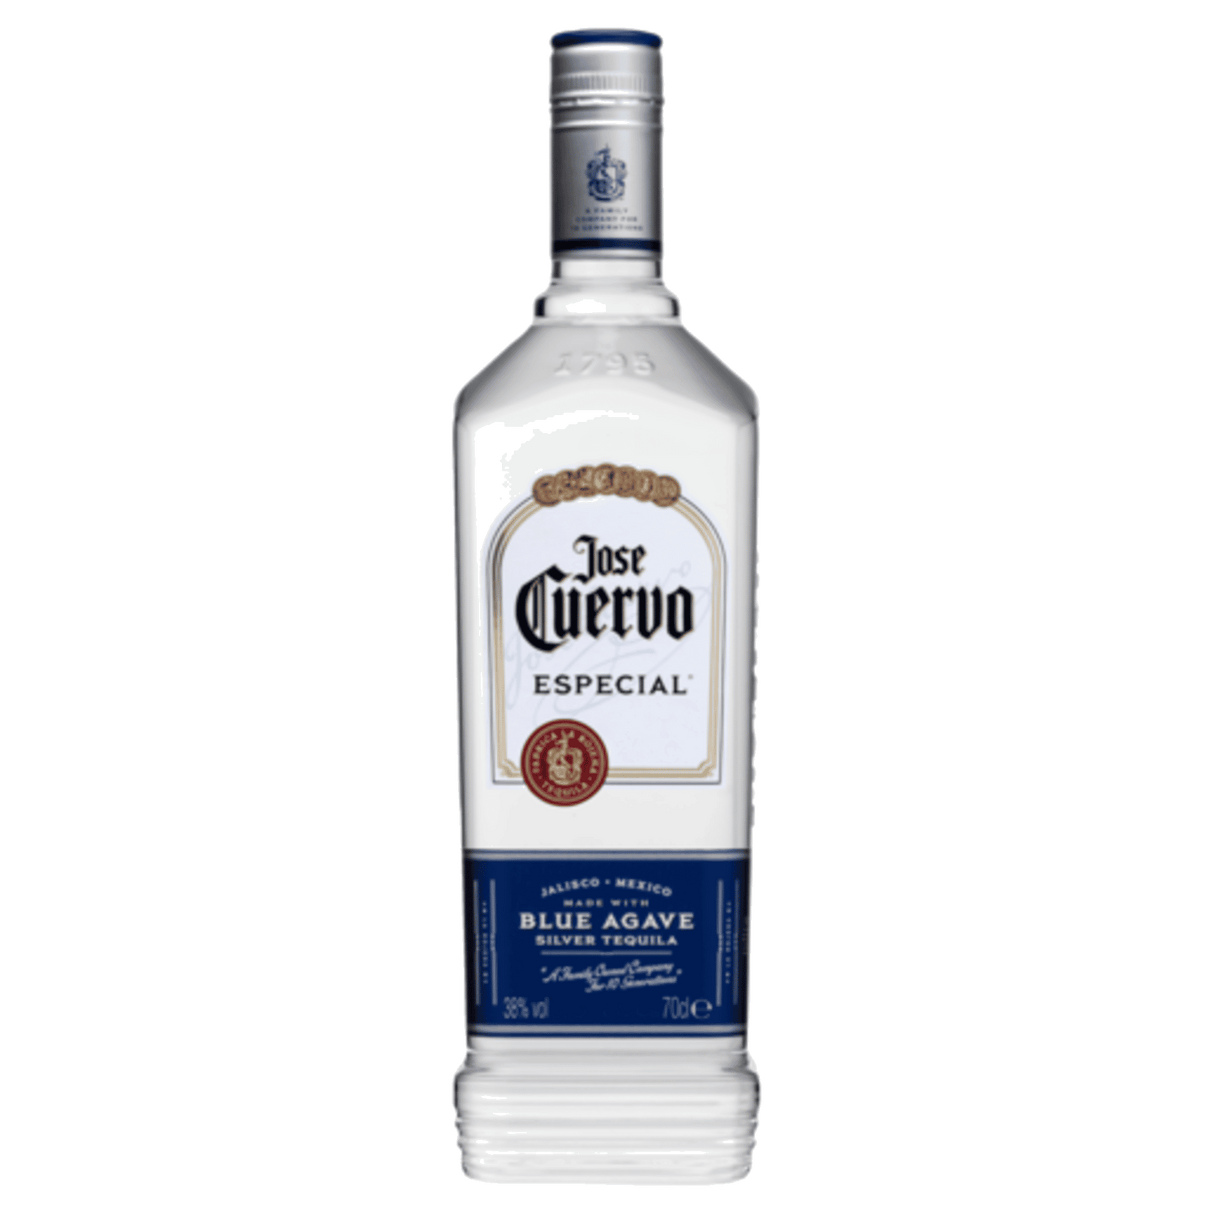 Jose Cuervo Especial Tequila Silver 700ml